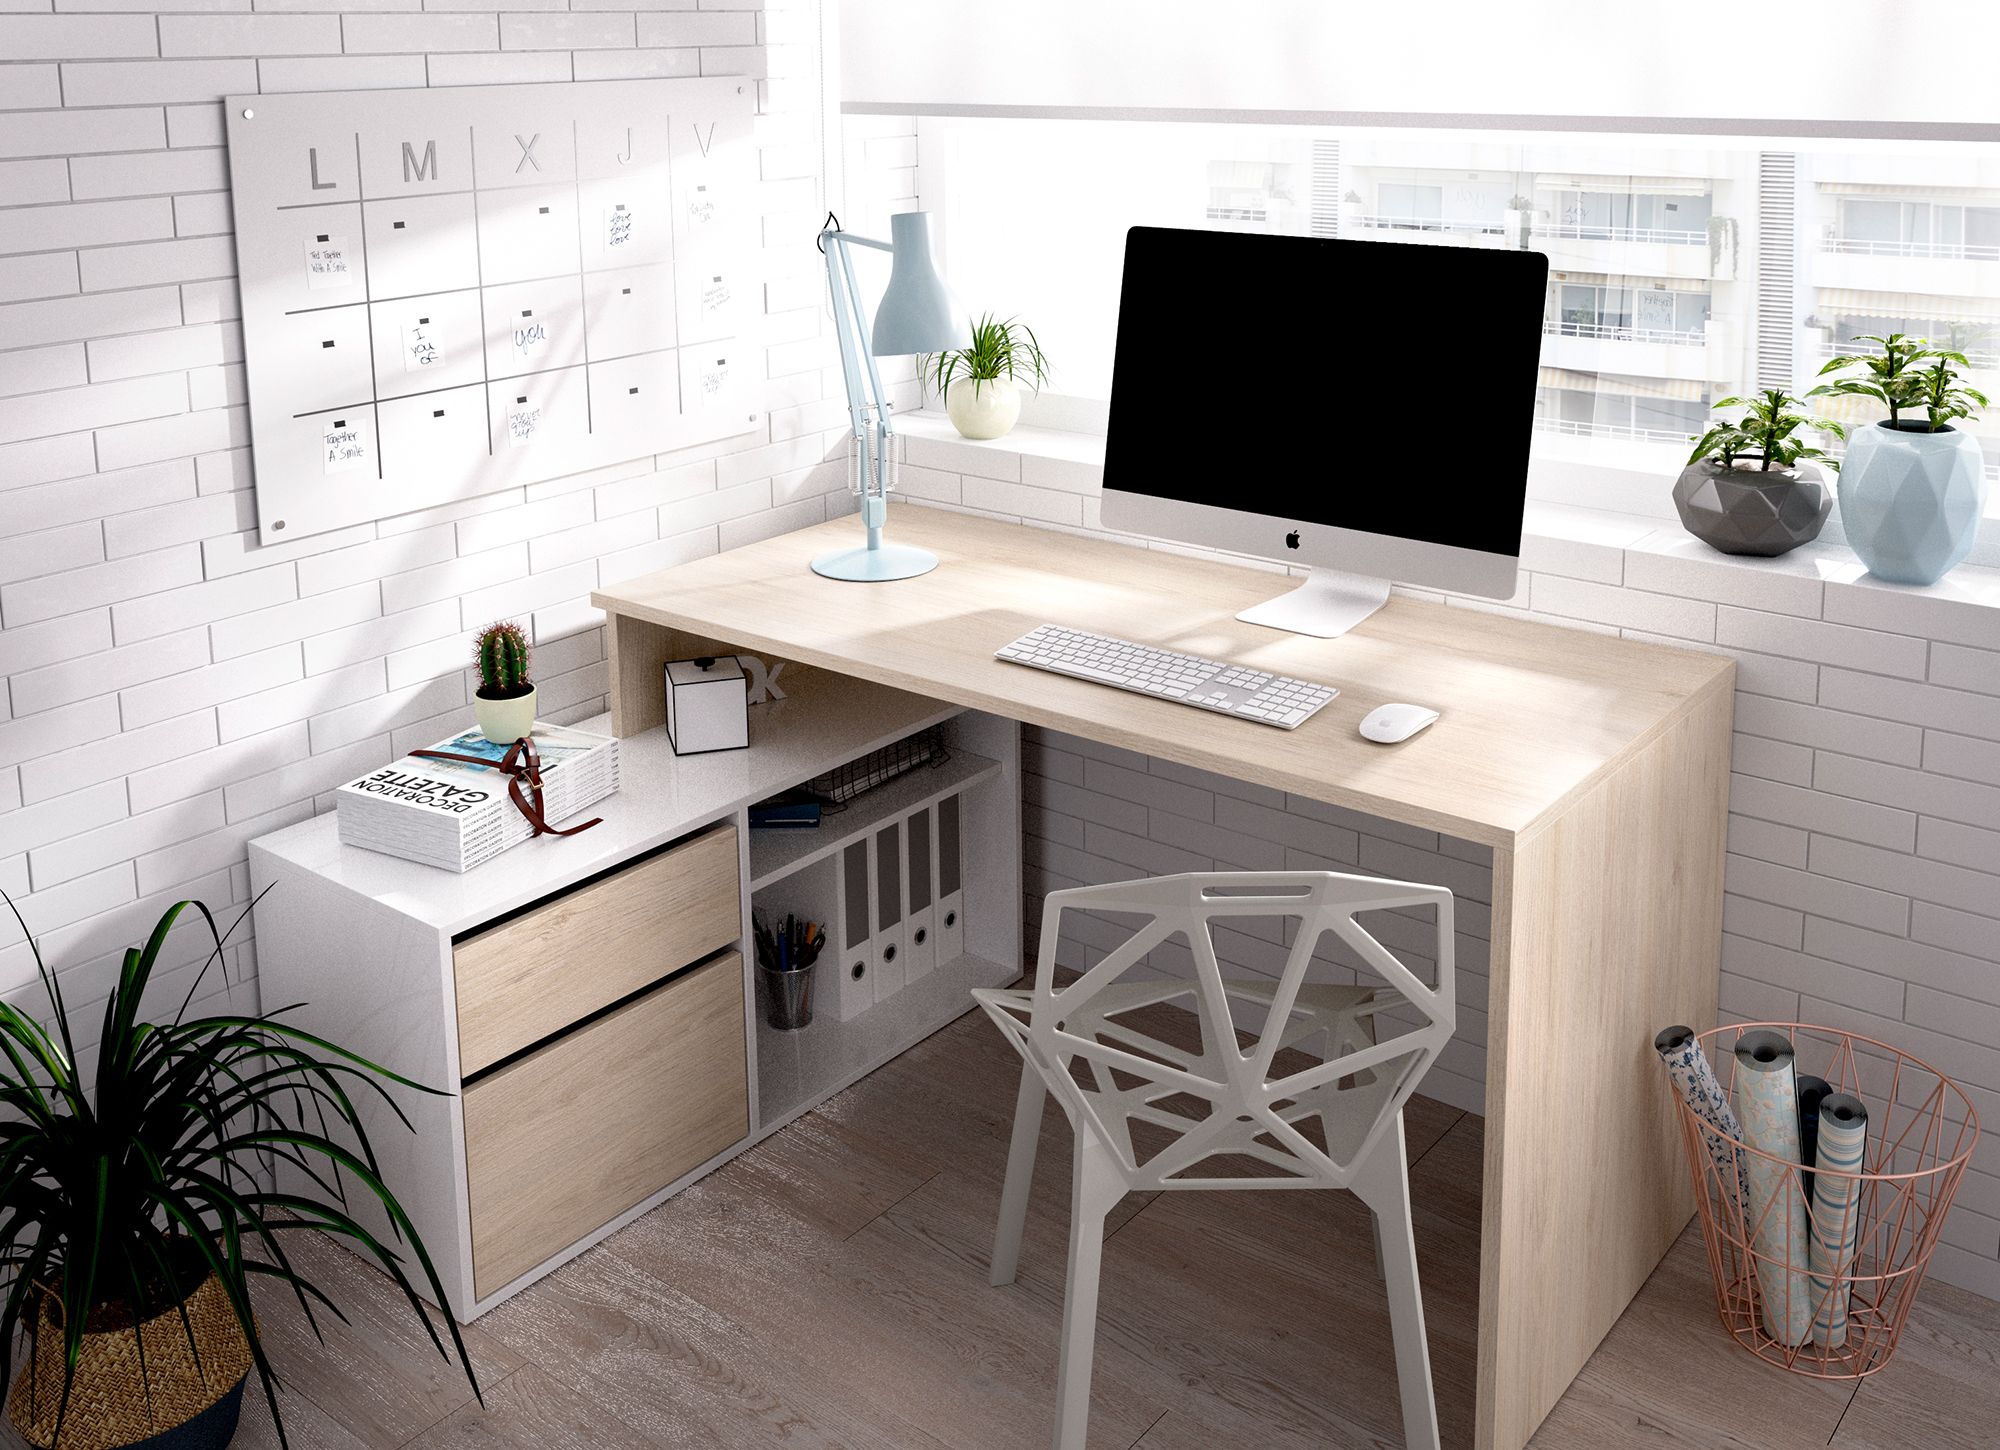 soges escritorios 100 x 50 cm mesa de ordenador compacto resistente Home escritorio oficina escritorio para reunión formación escritorio estación de trabajo,WK-JK100-OK 